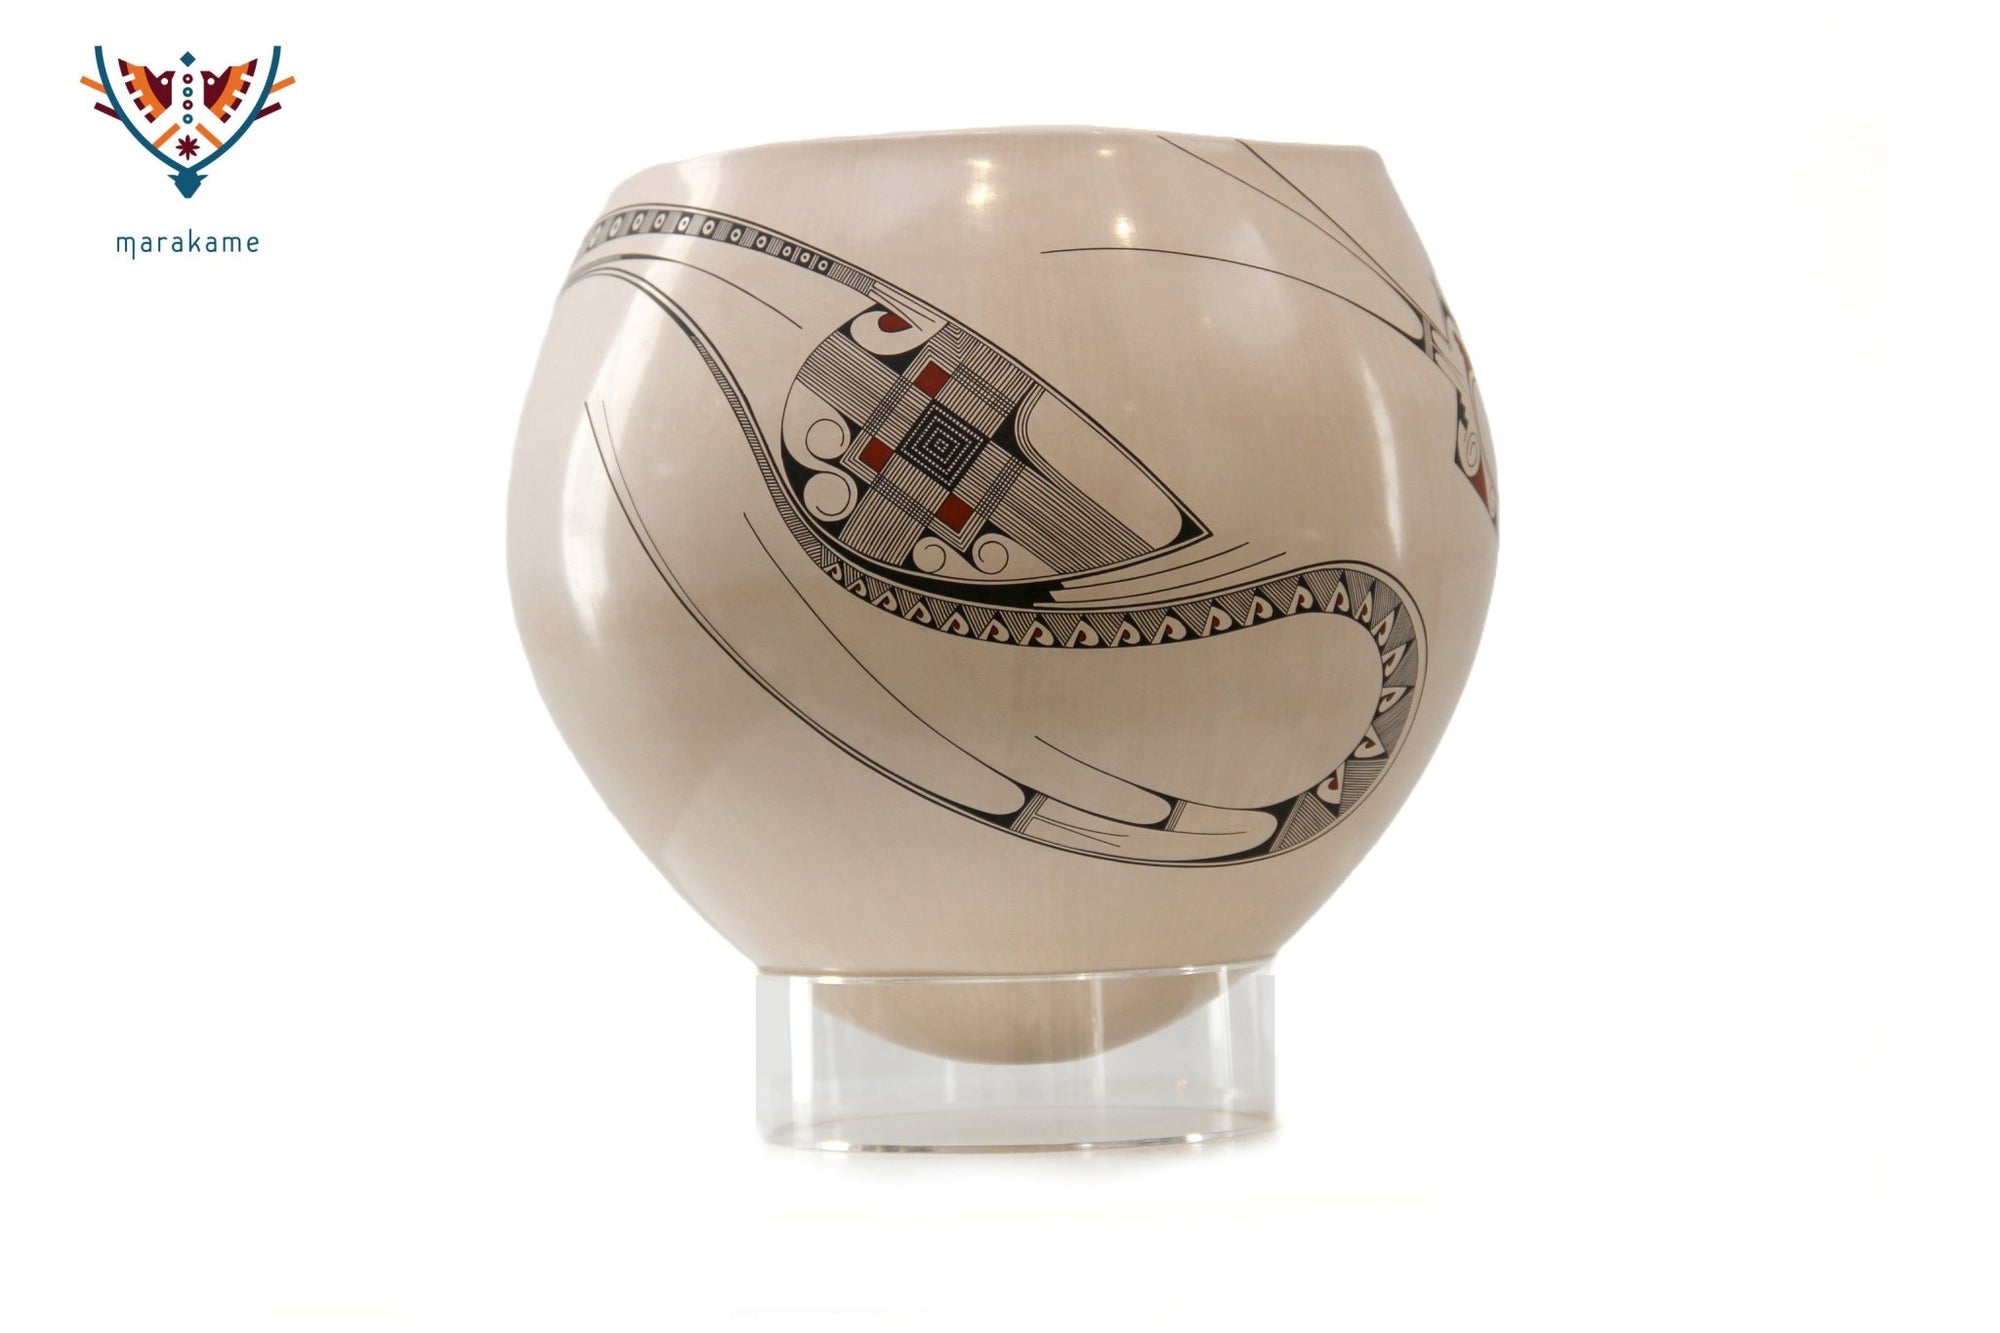 Mata Ortiz Ceramic - The Coralillo and The Swallow - Diego Valles - Huichol Art - Marakame